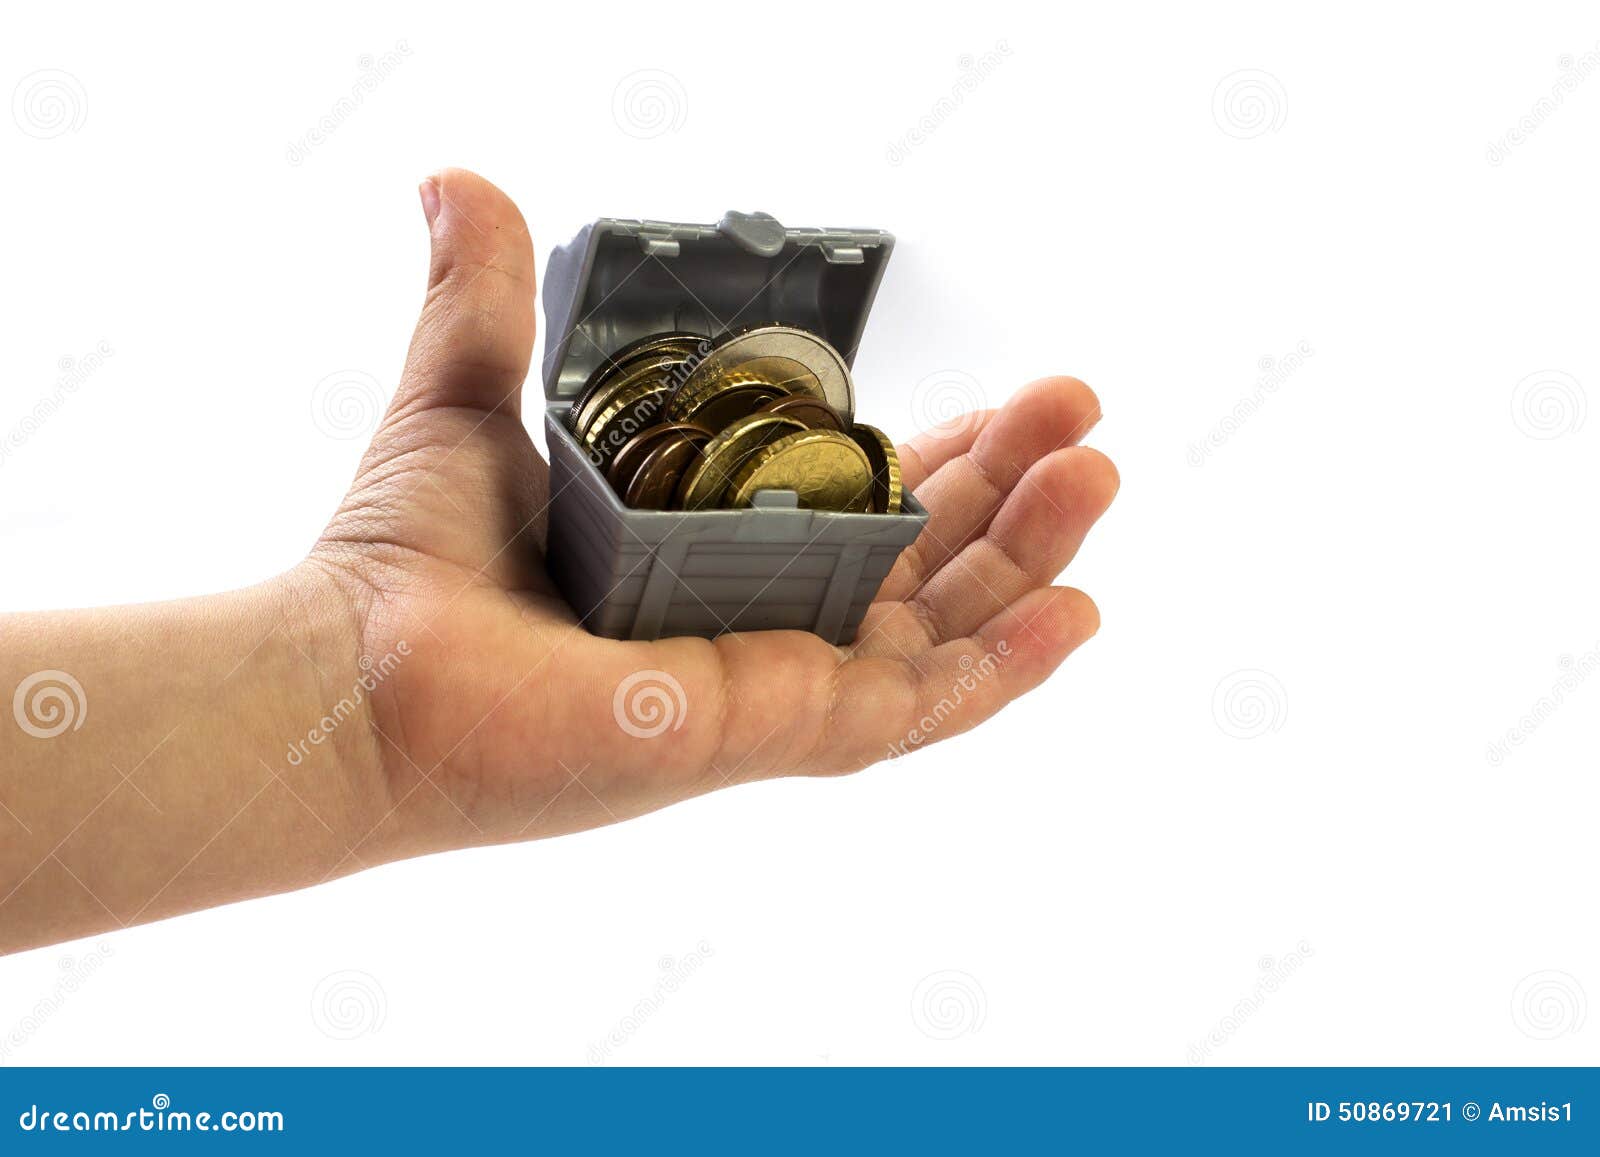 Treasure hand stock image. Image of finger, brown, hand - 50869721